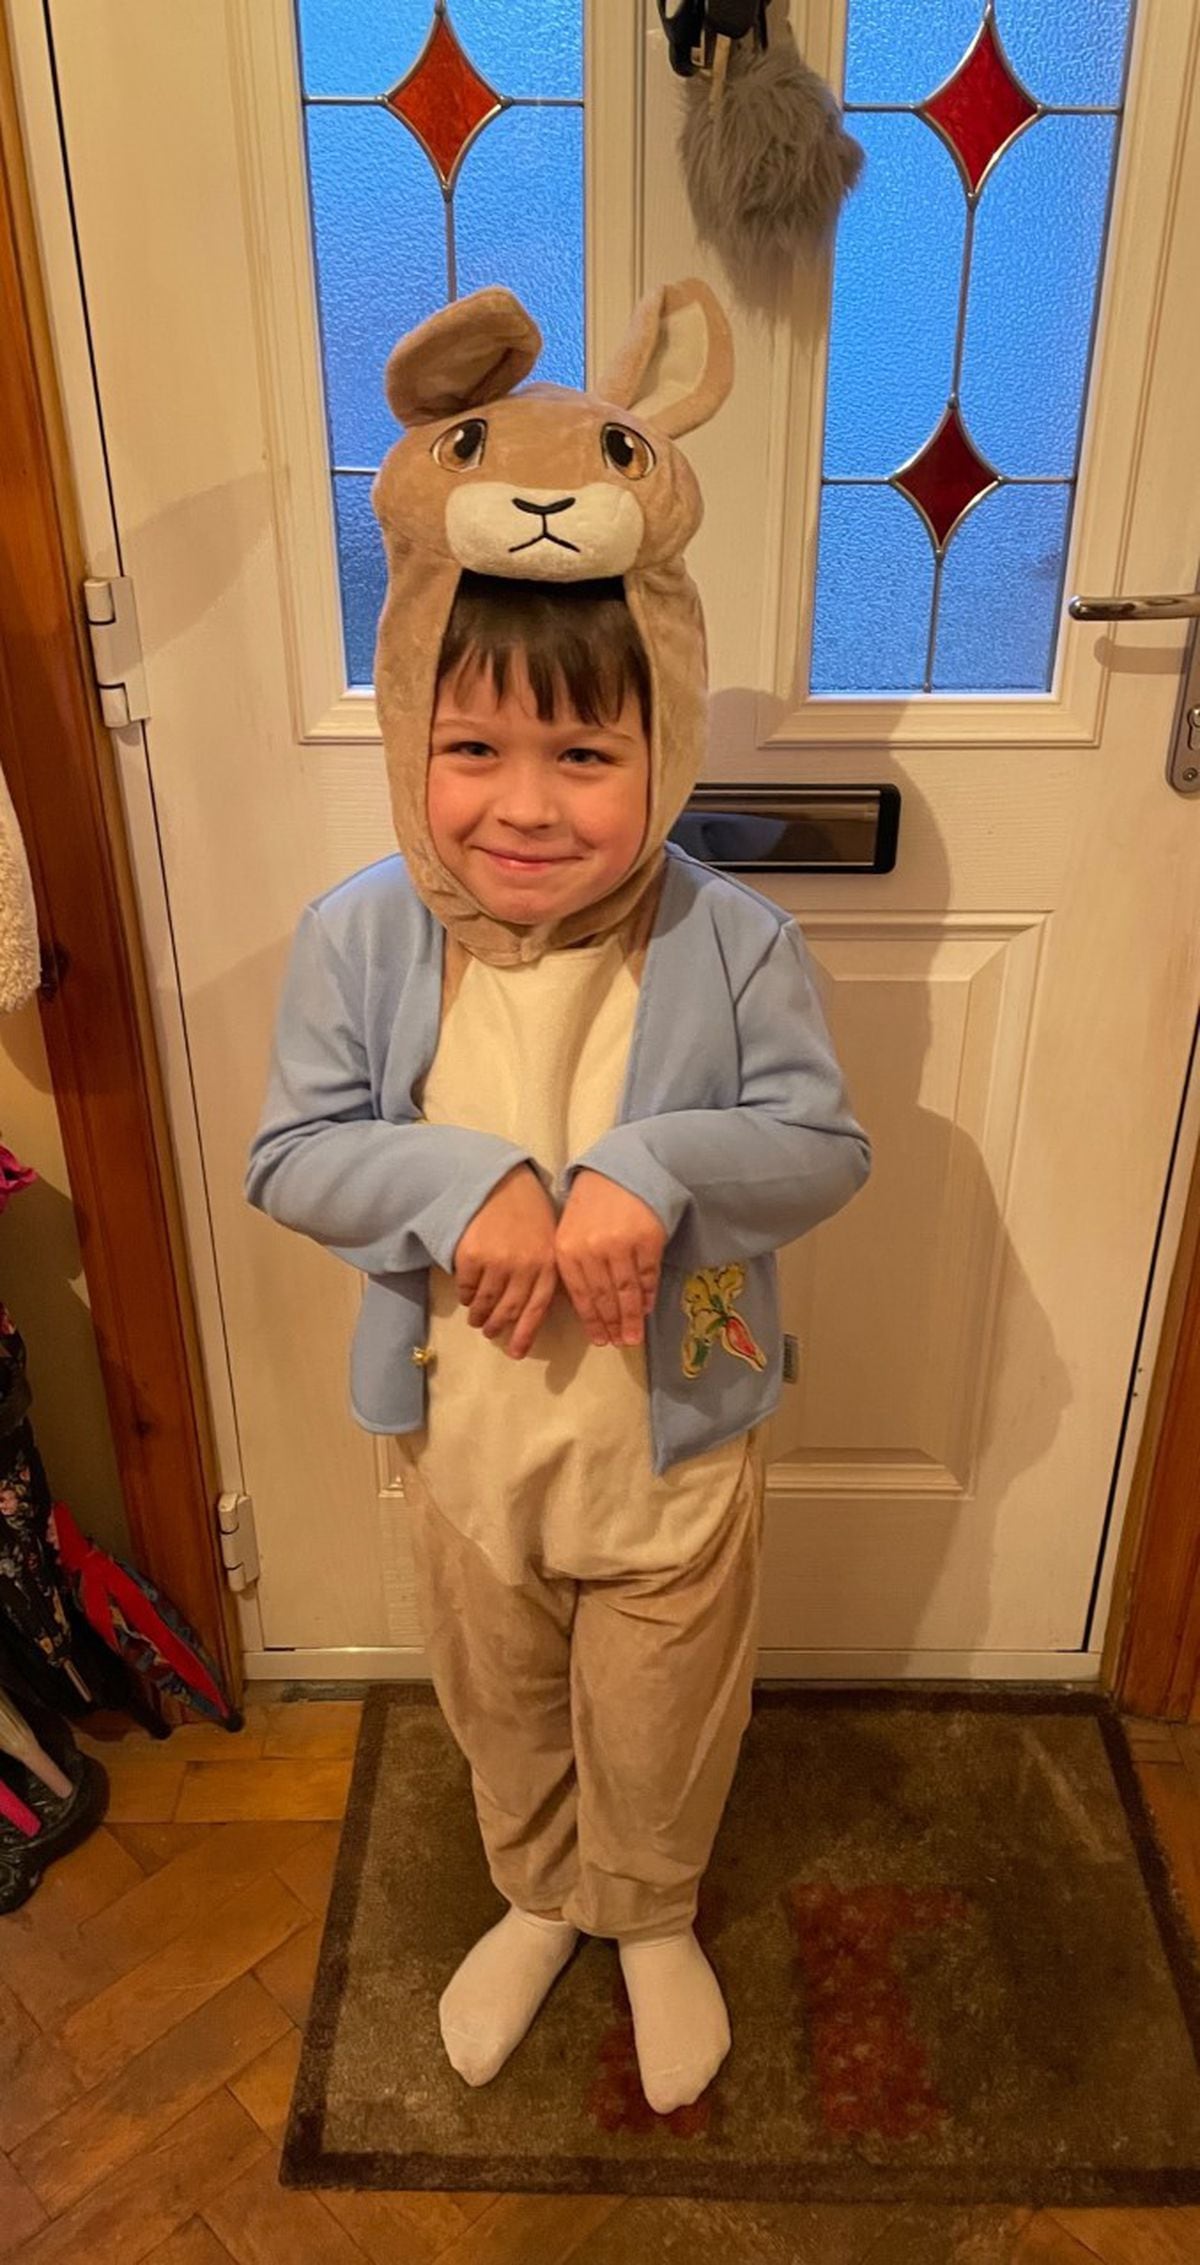 Jacob dressed up as Peter Rabbit